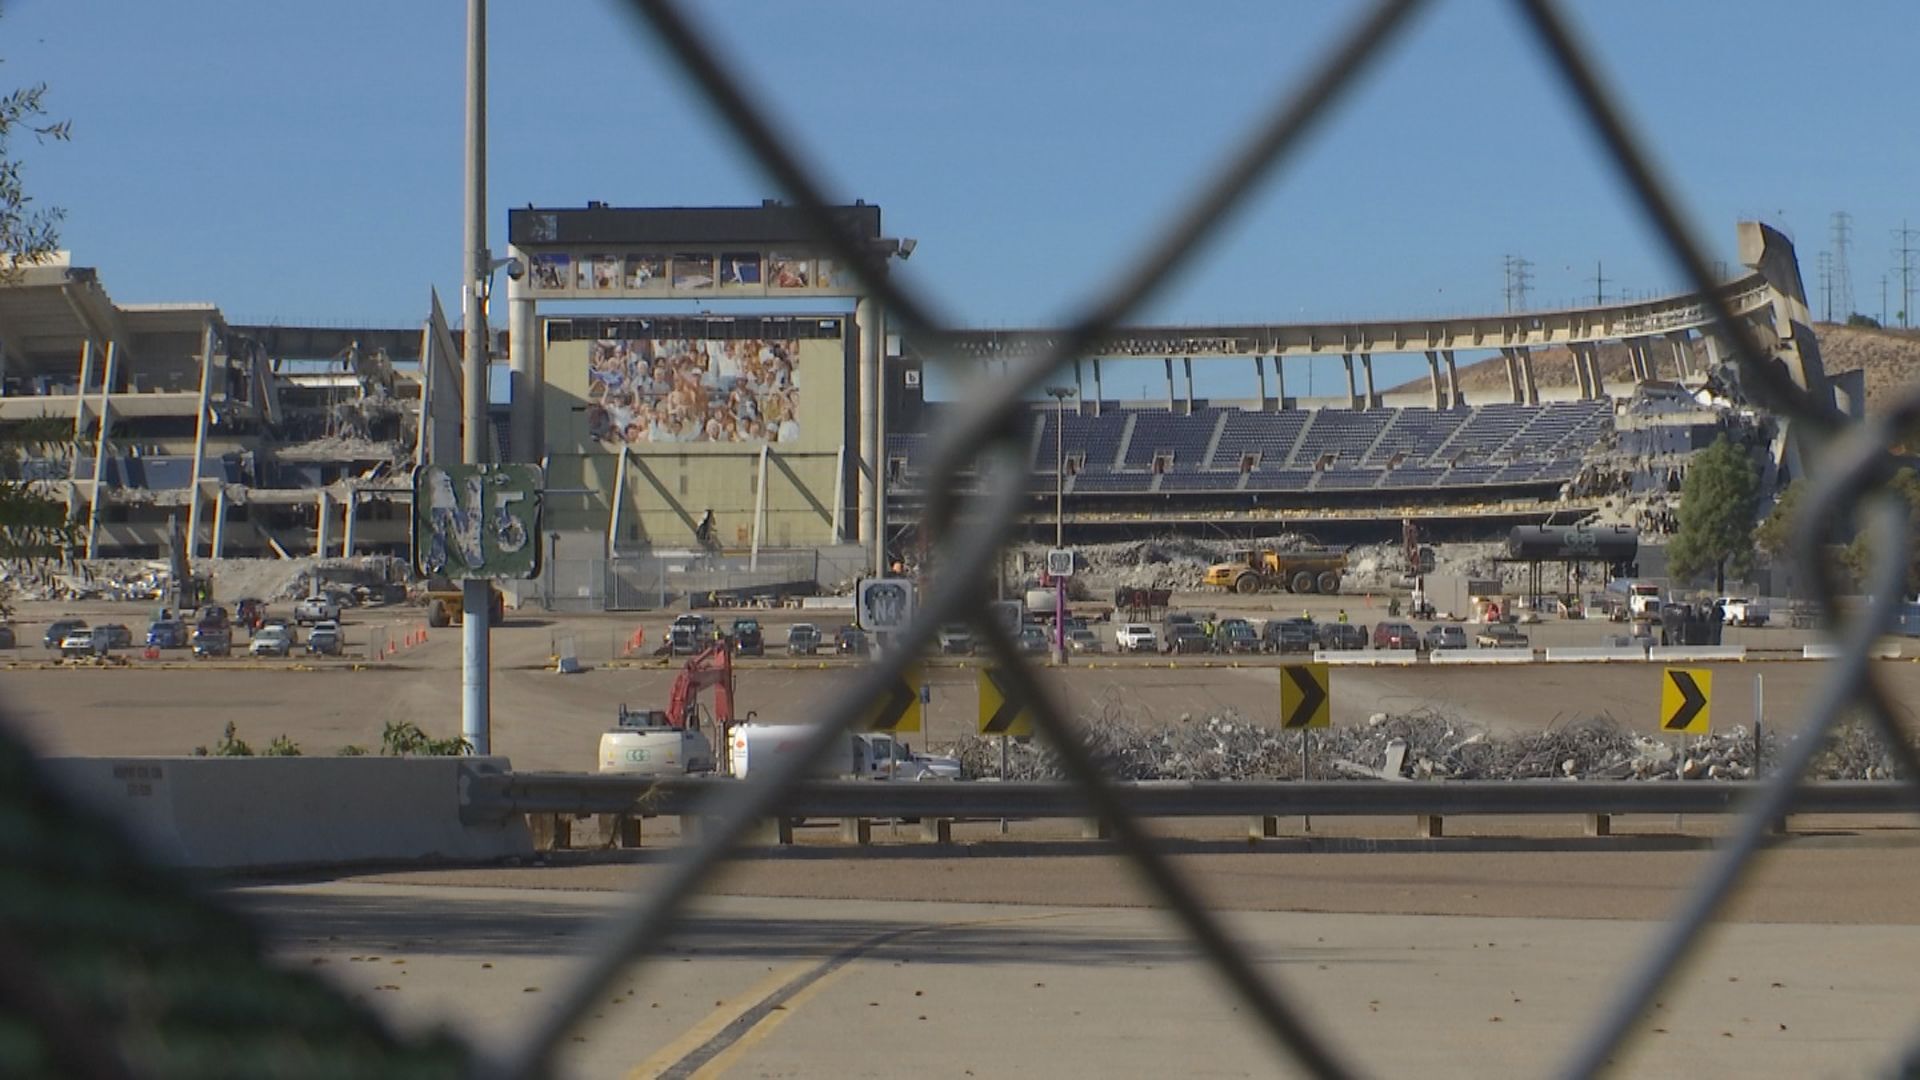 San Diego's stadium being torn down, but memories remain 